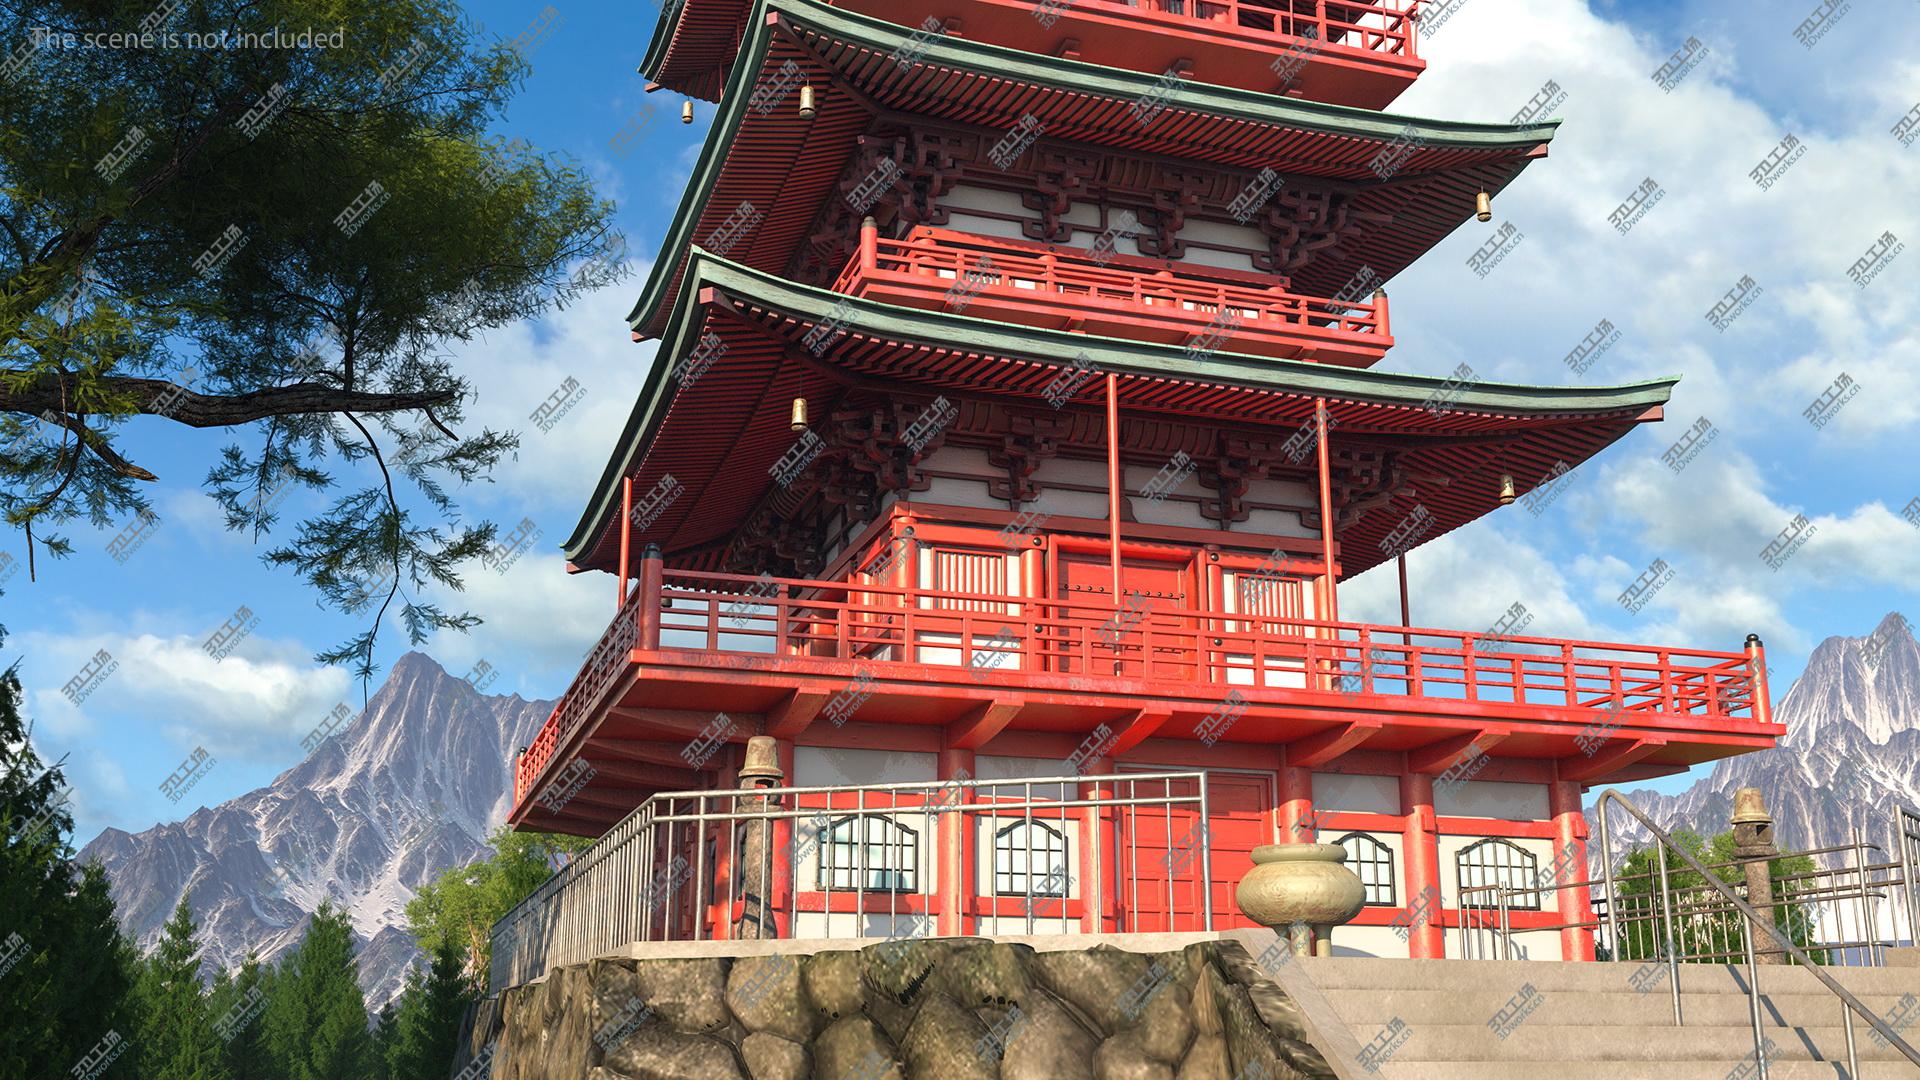 images/goods_img/20210319/3D Japanese Temple/5.jpg